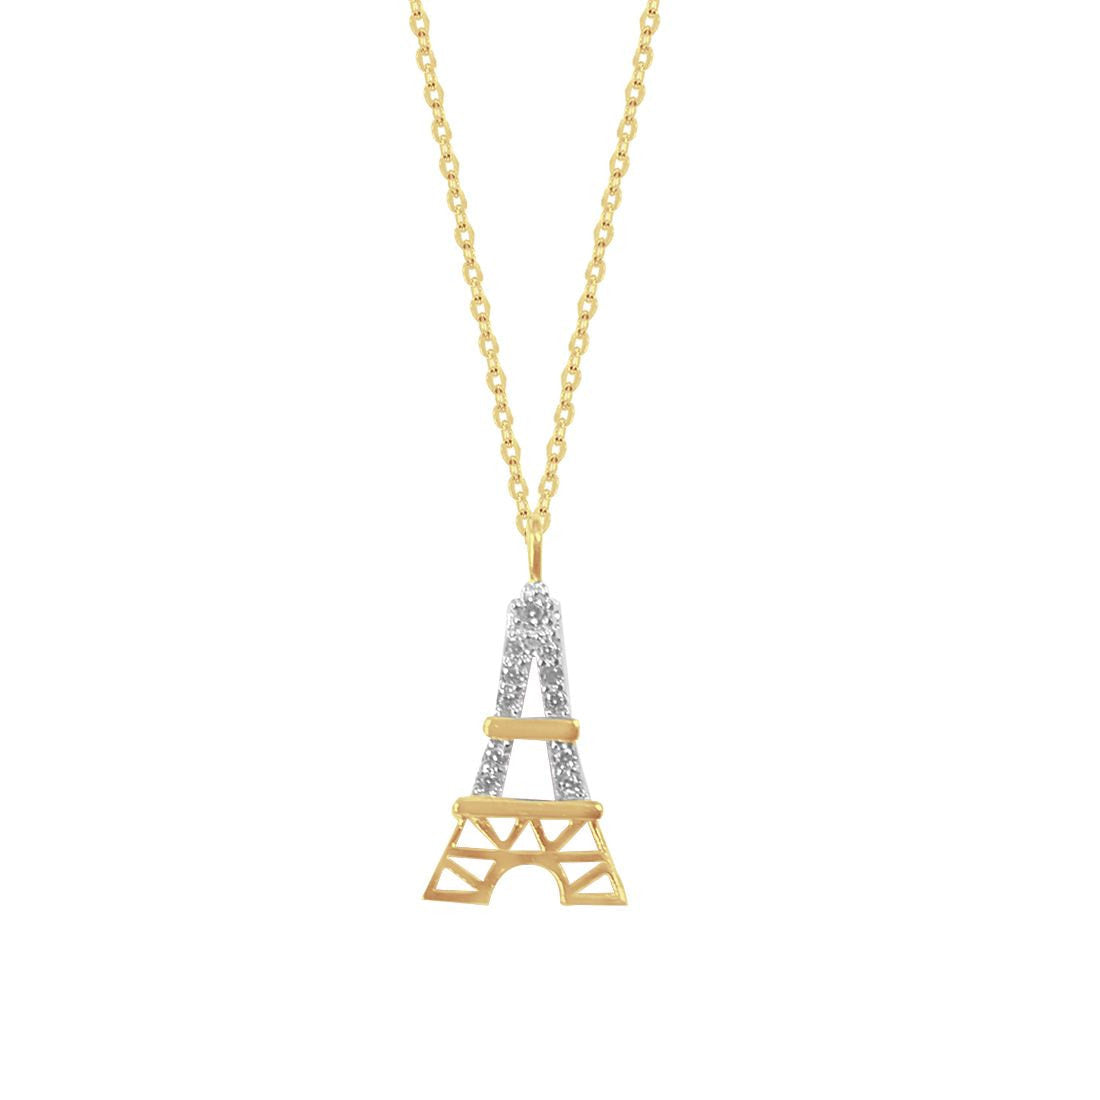 Gargantilla Oro 10k, con Dije Torre Eiffel con Zirconias, 45 cm Largo - Infiniti Joyas